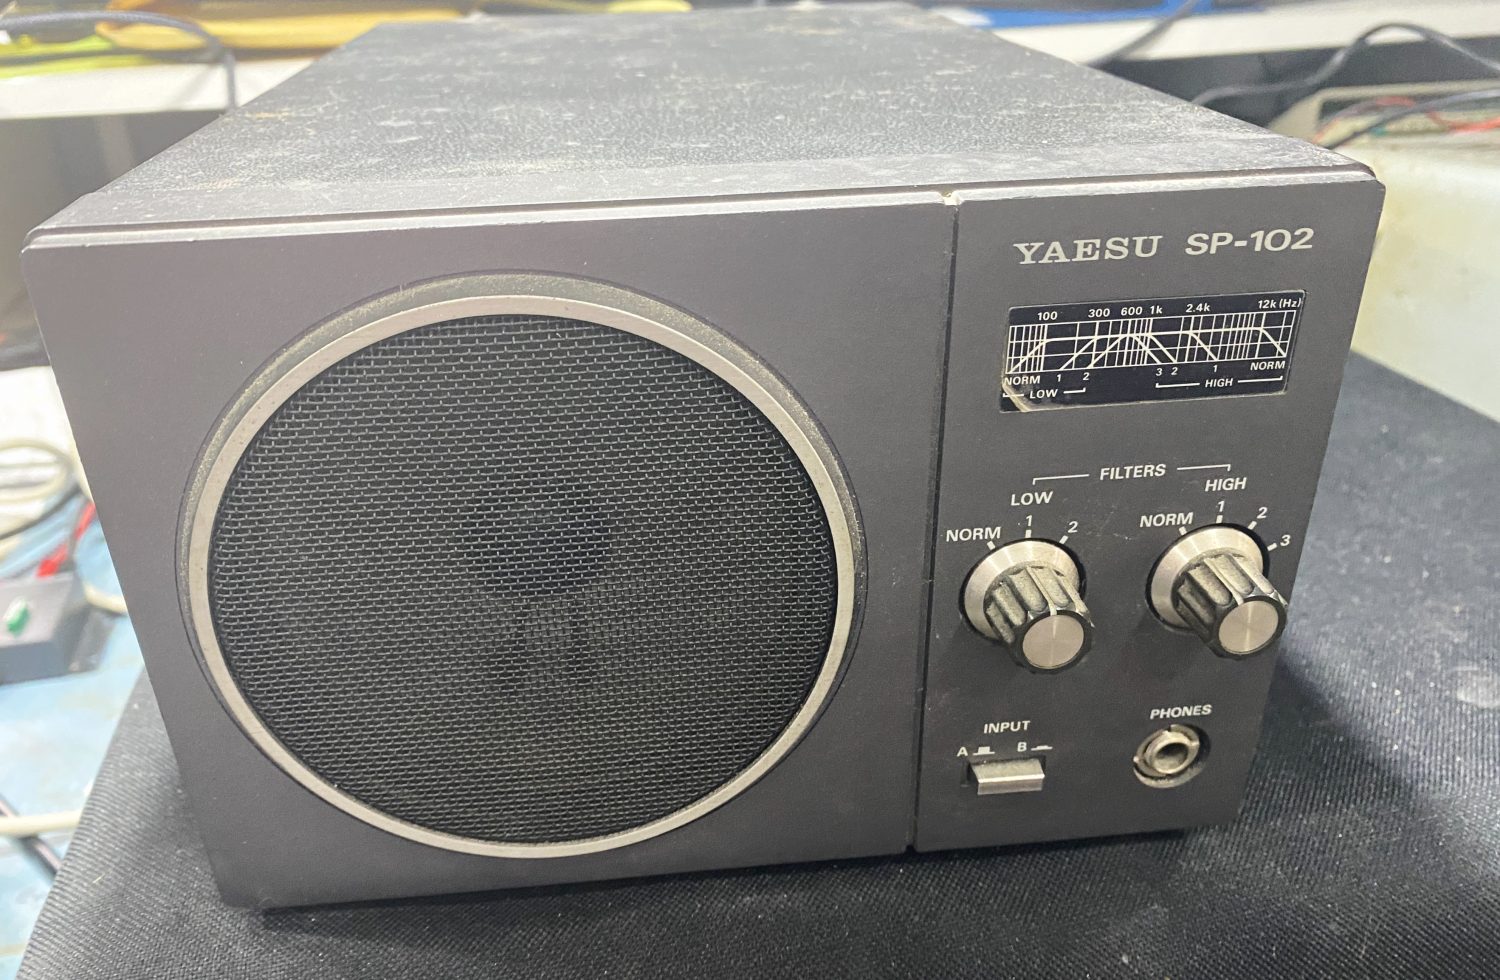 Yaesu SP-102 - External Speaker, I wish is was the FT-102